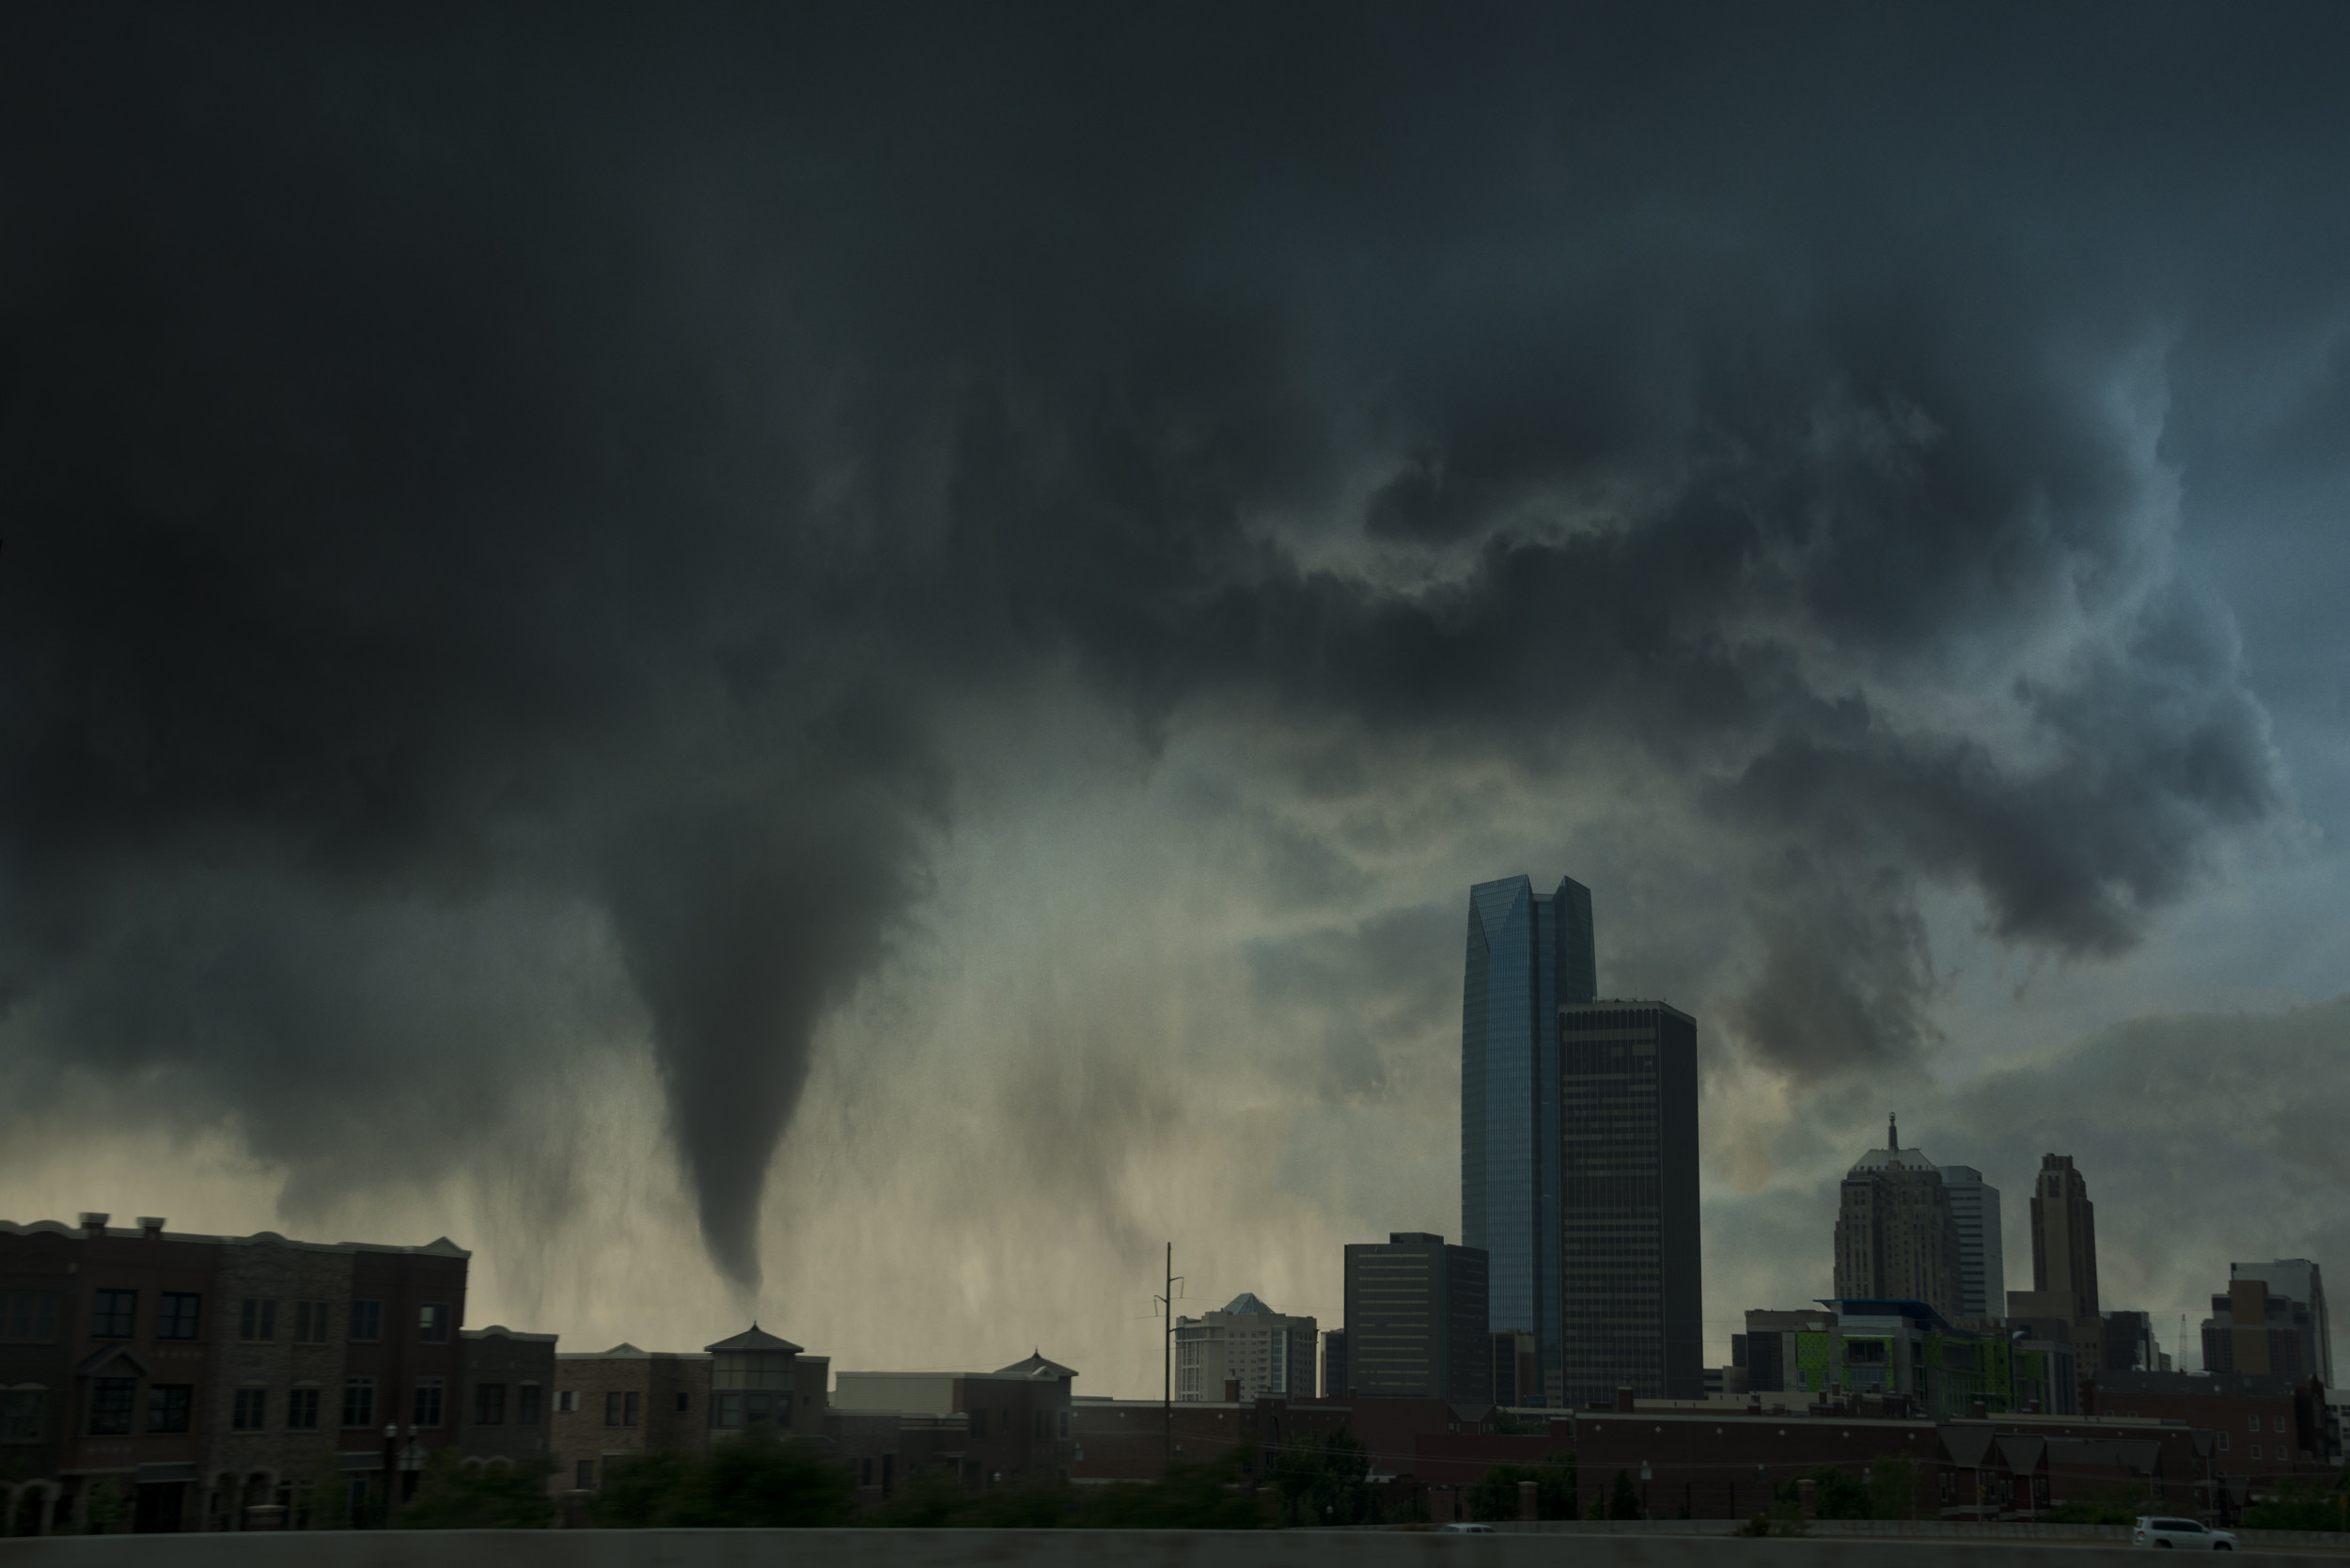 oklahoma tornado videos show terrifying storms as buildings damaged